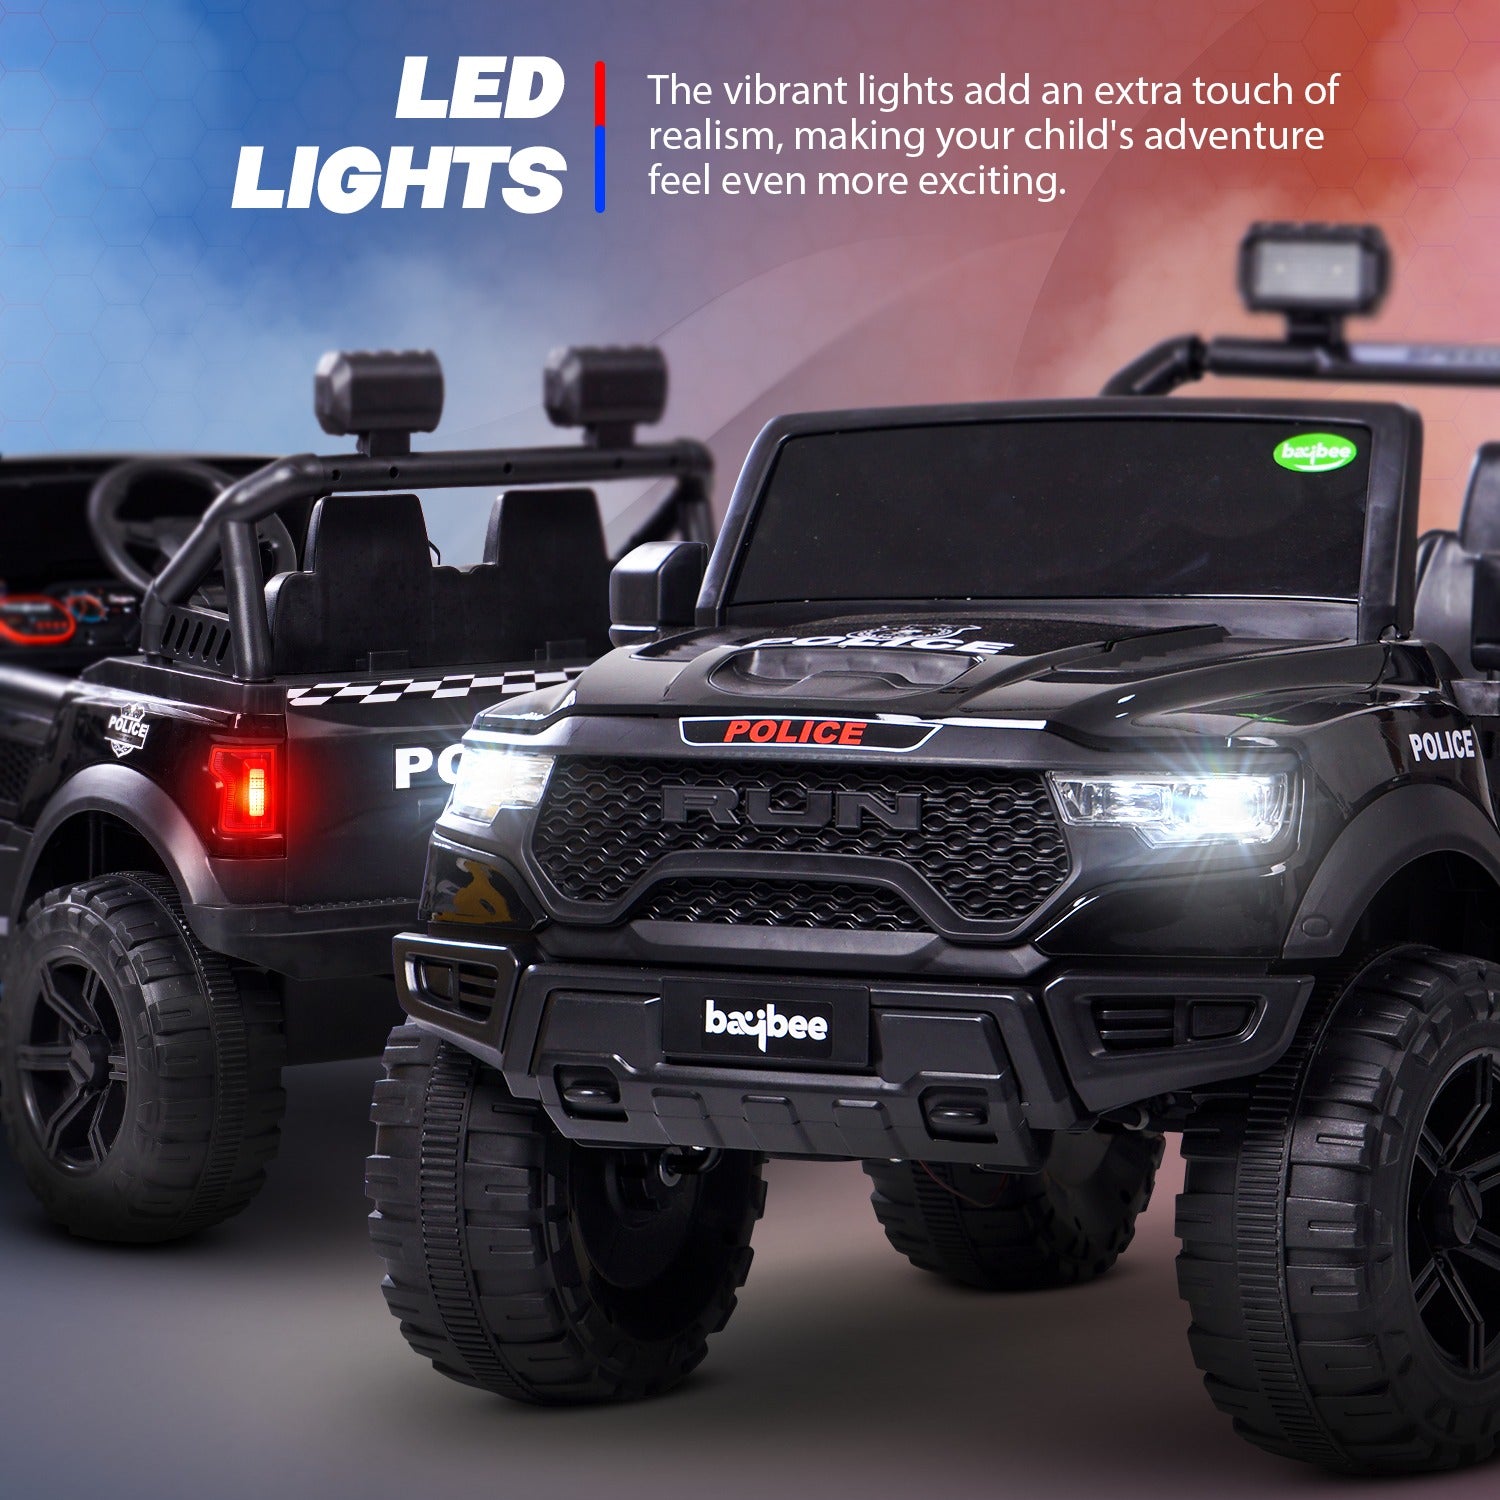 Minikin RAM 2x2 Electric Rechargeable Jeep | LED Head Lights & Music | 1-7 Years